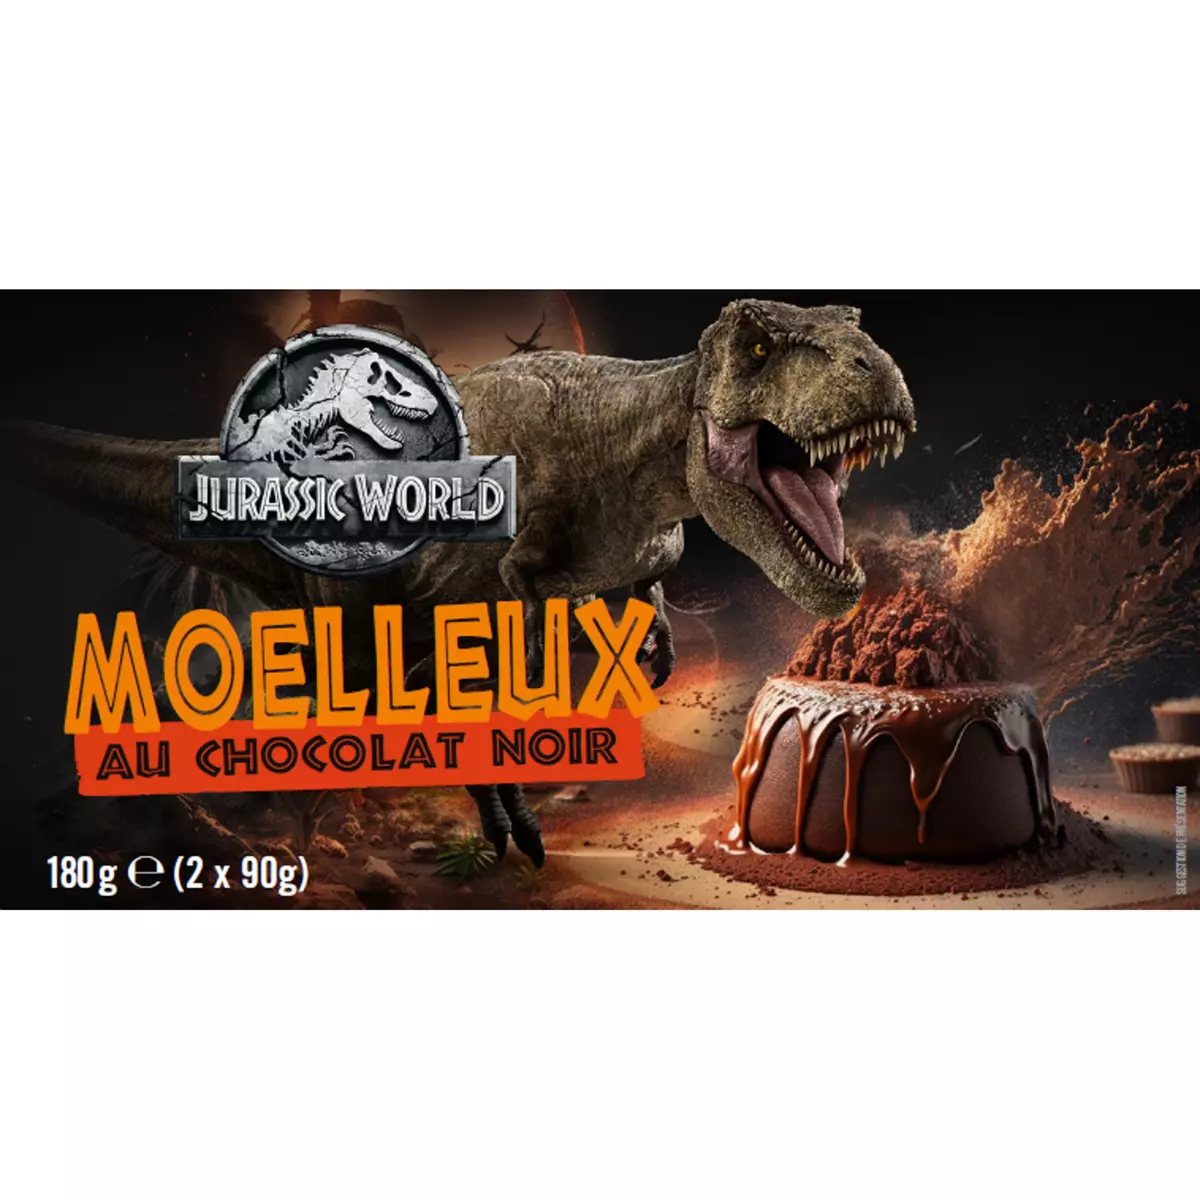 Jurassic World Moelleux au chocolat noir 180g